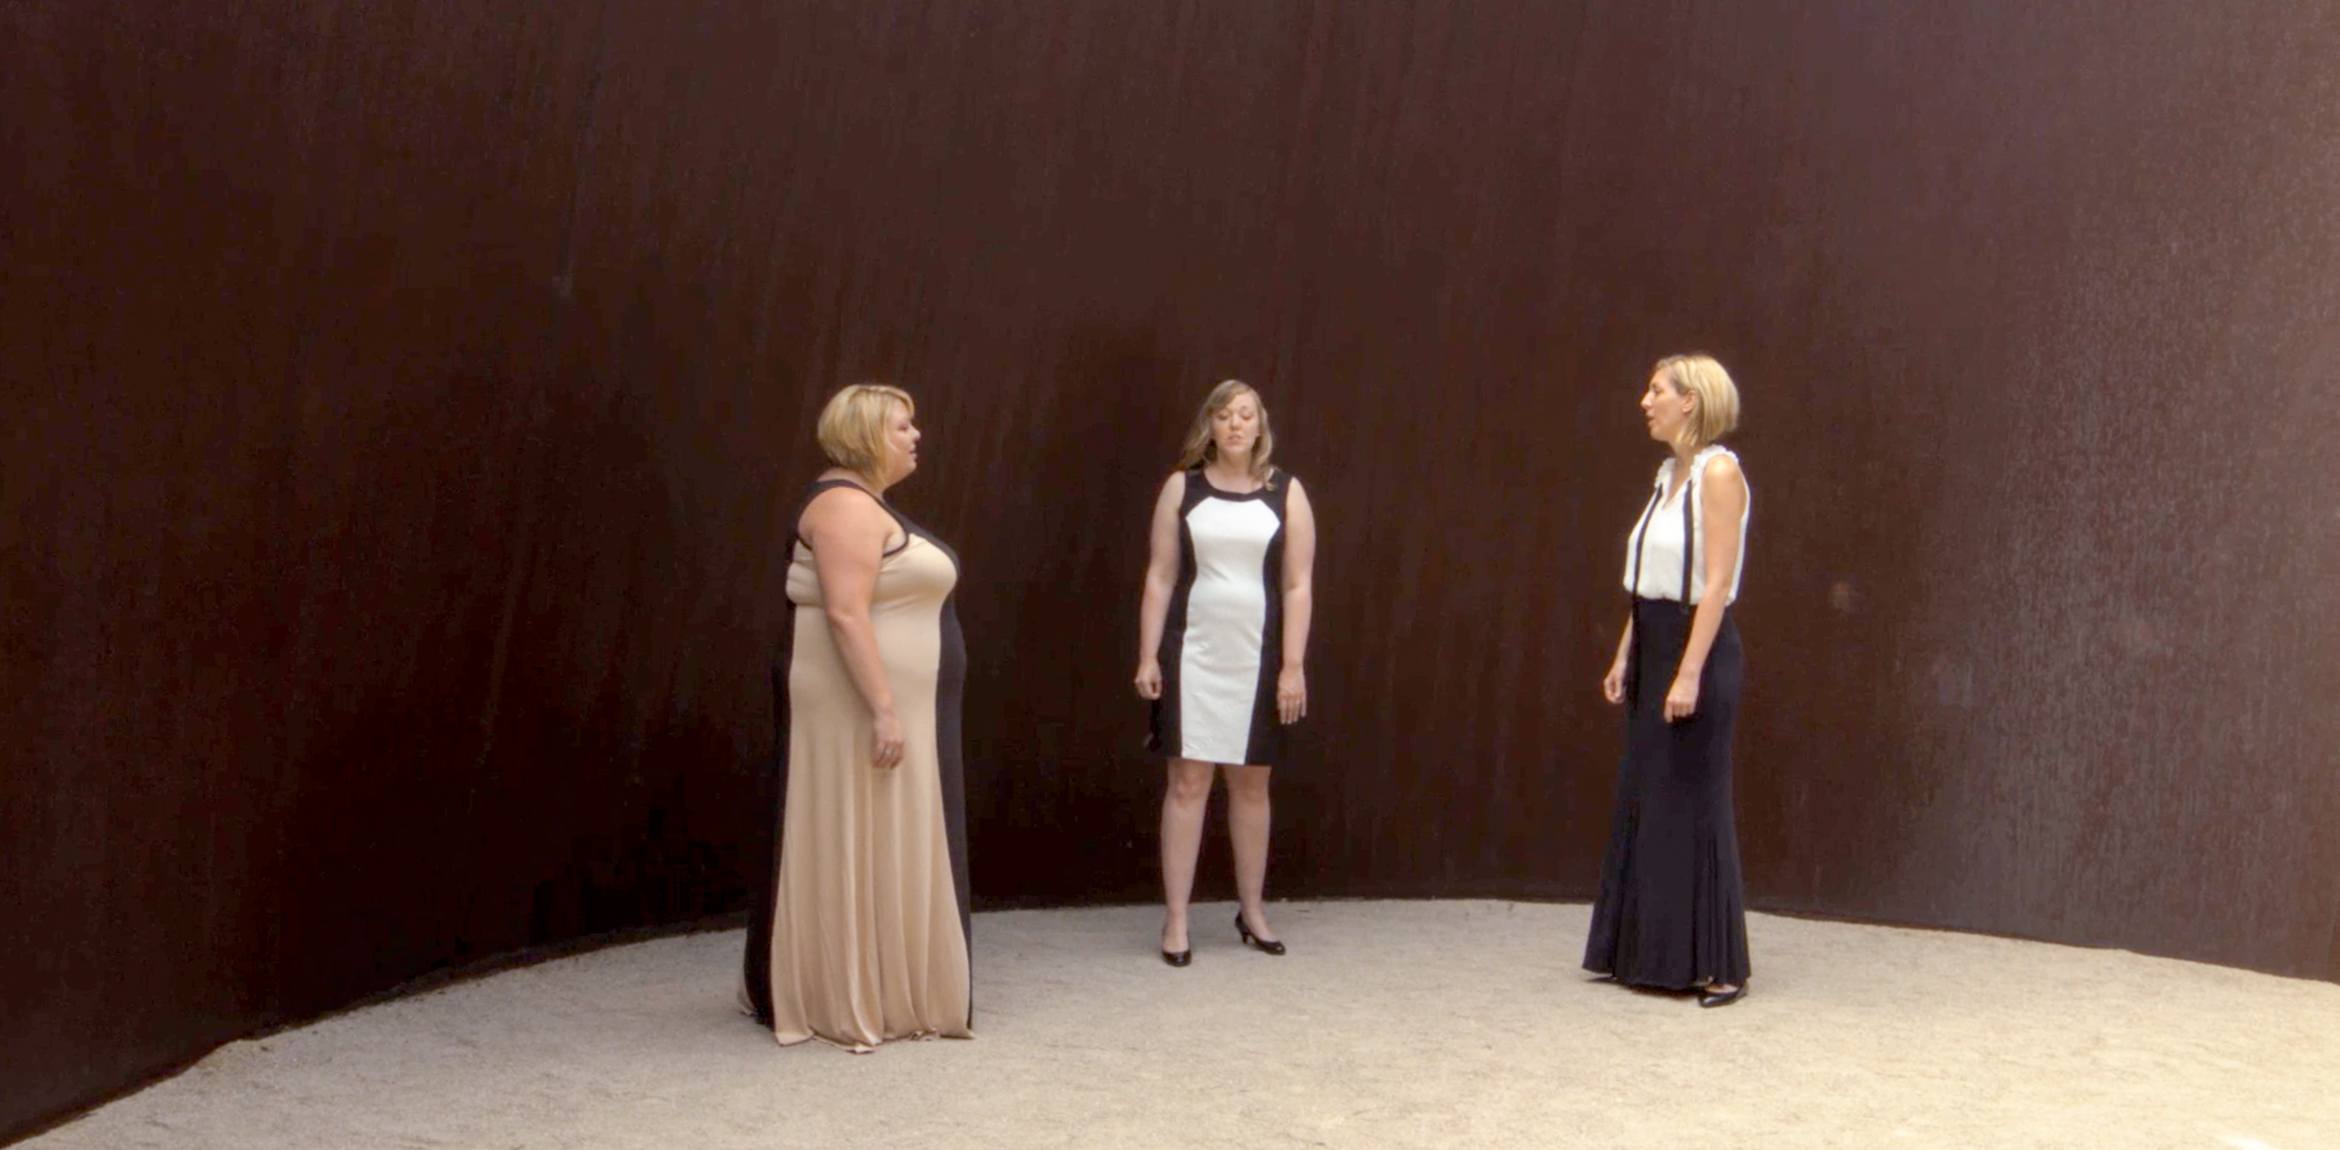 Three singers sing together in Richard Serra's "Joe."